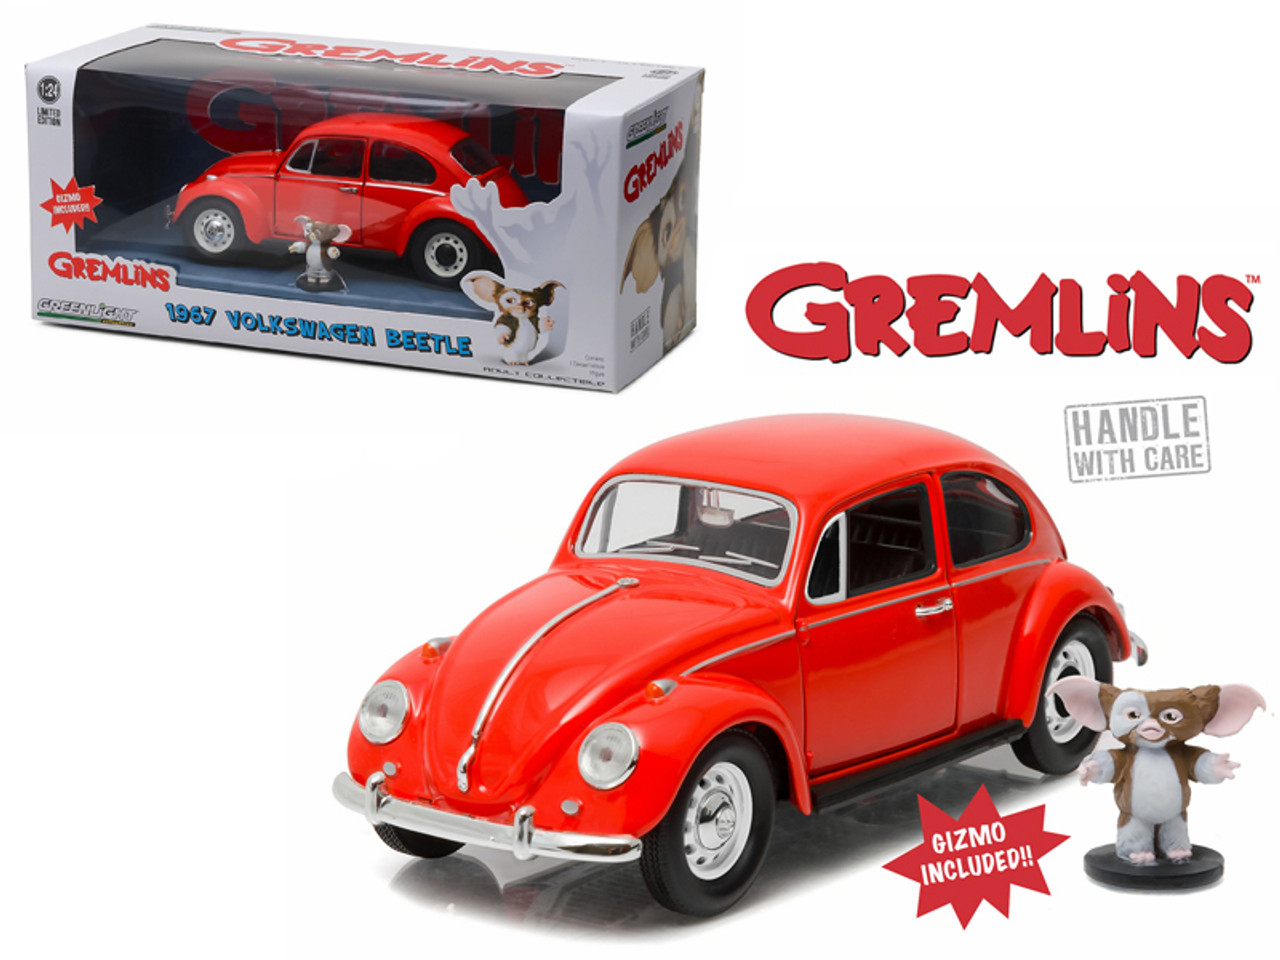 1967 Volkswagen Beetle with Gizmo Figurine "Gremlins" (1984) Movie 1/24 Diecast Model Car by Greenlight